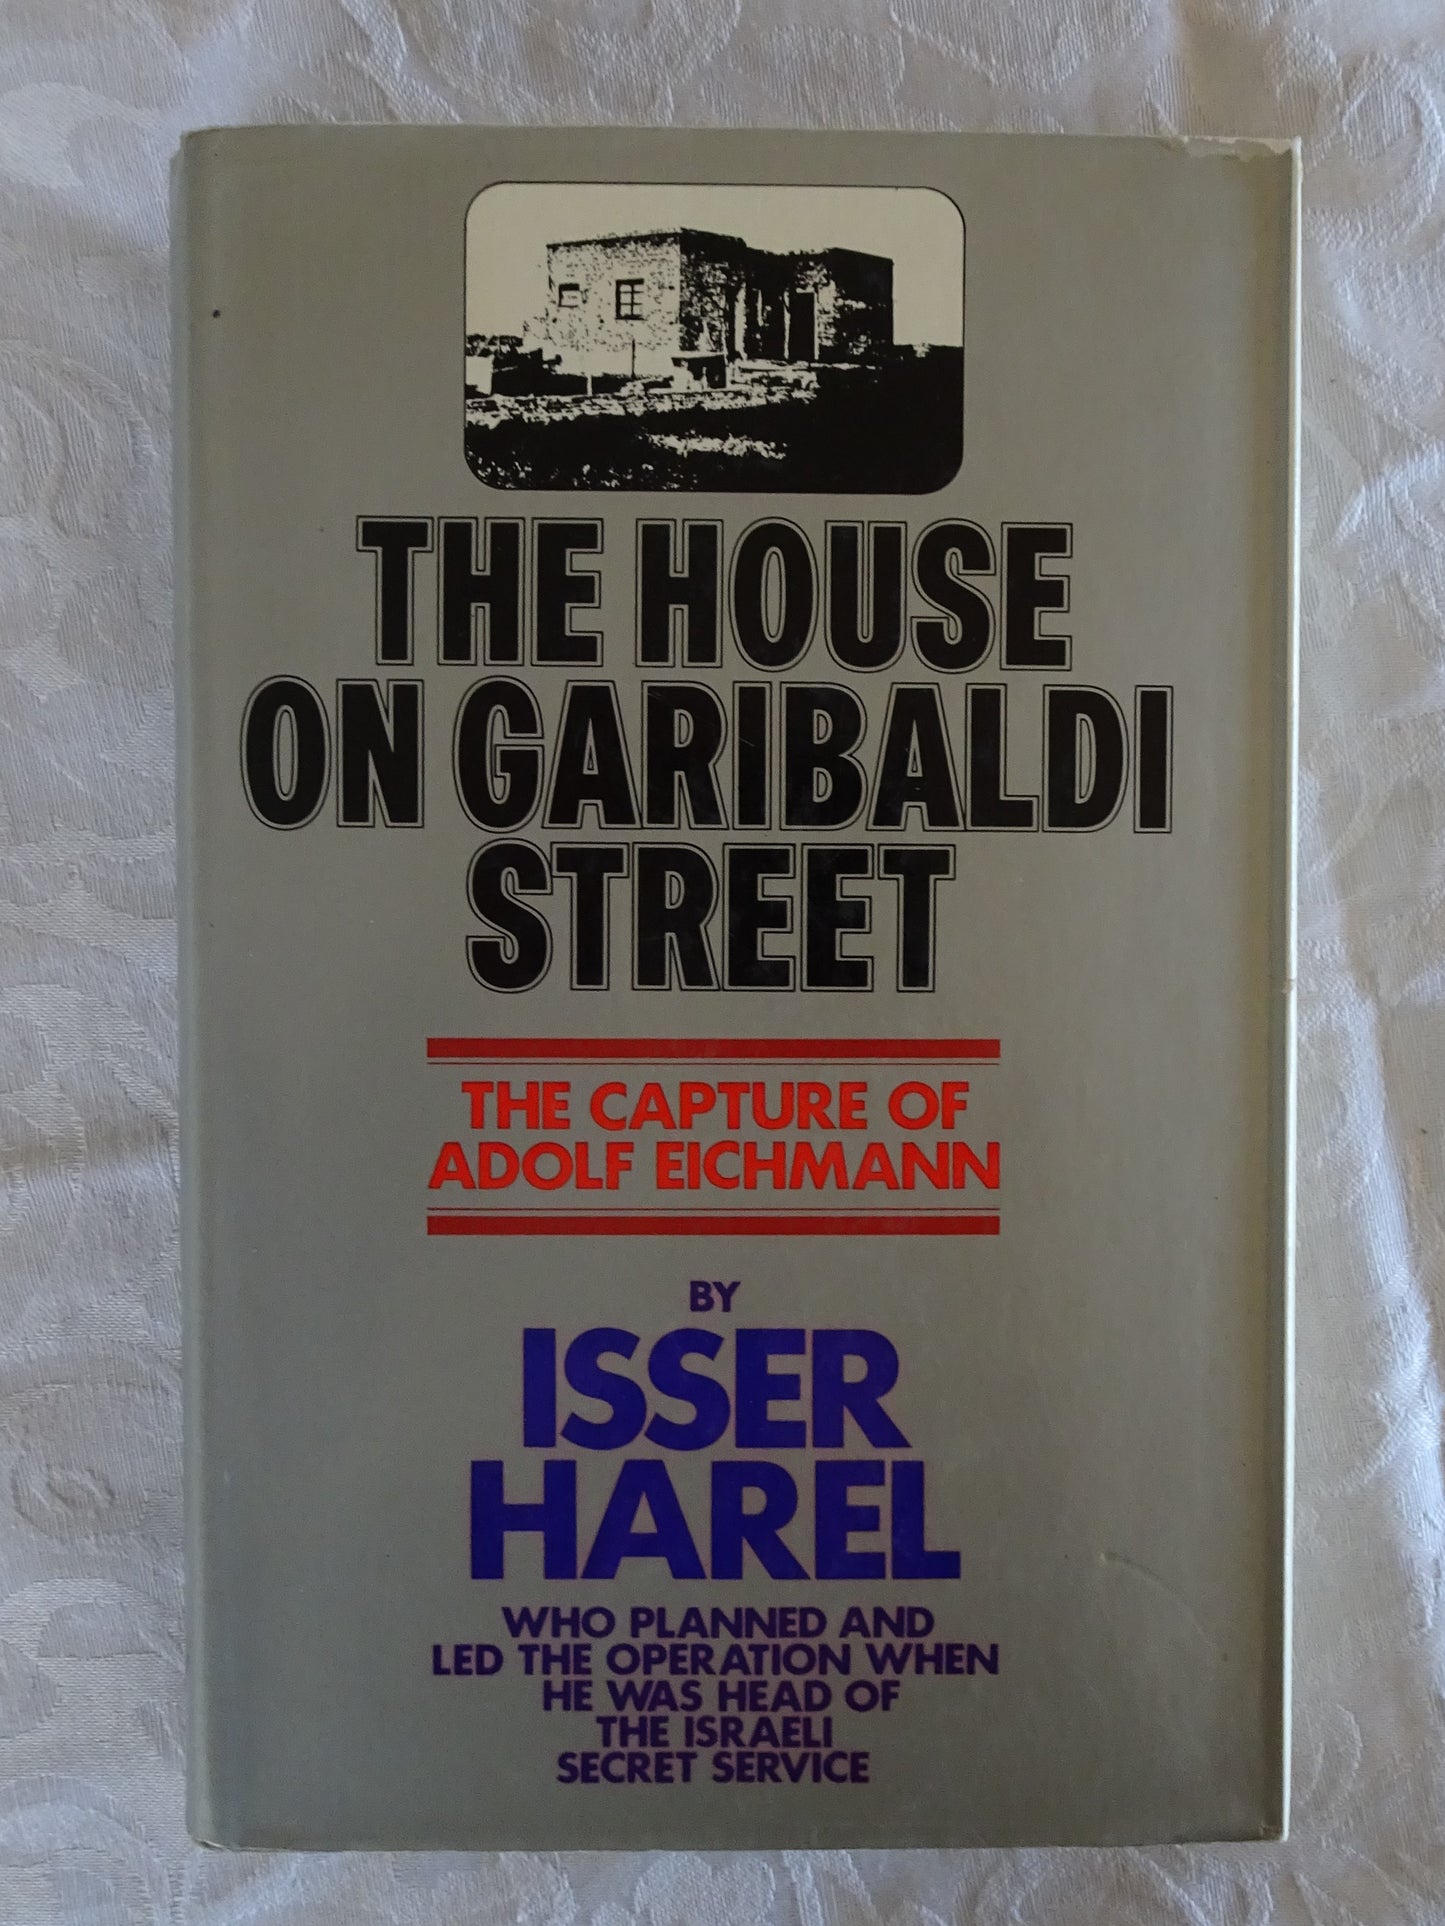 The House On Garibaldi Street by Isser Harel